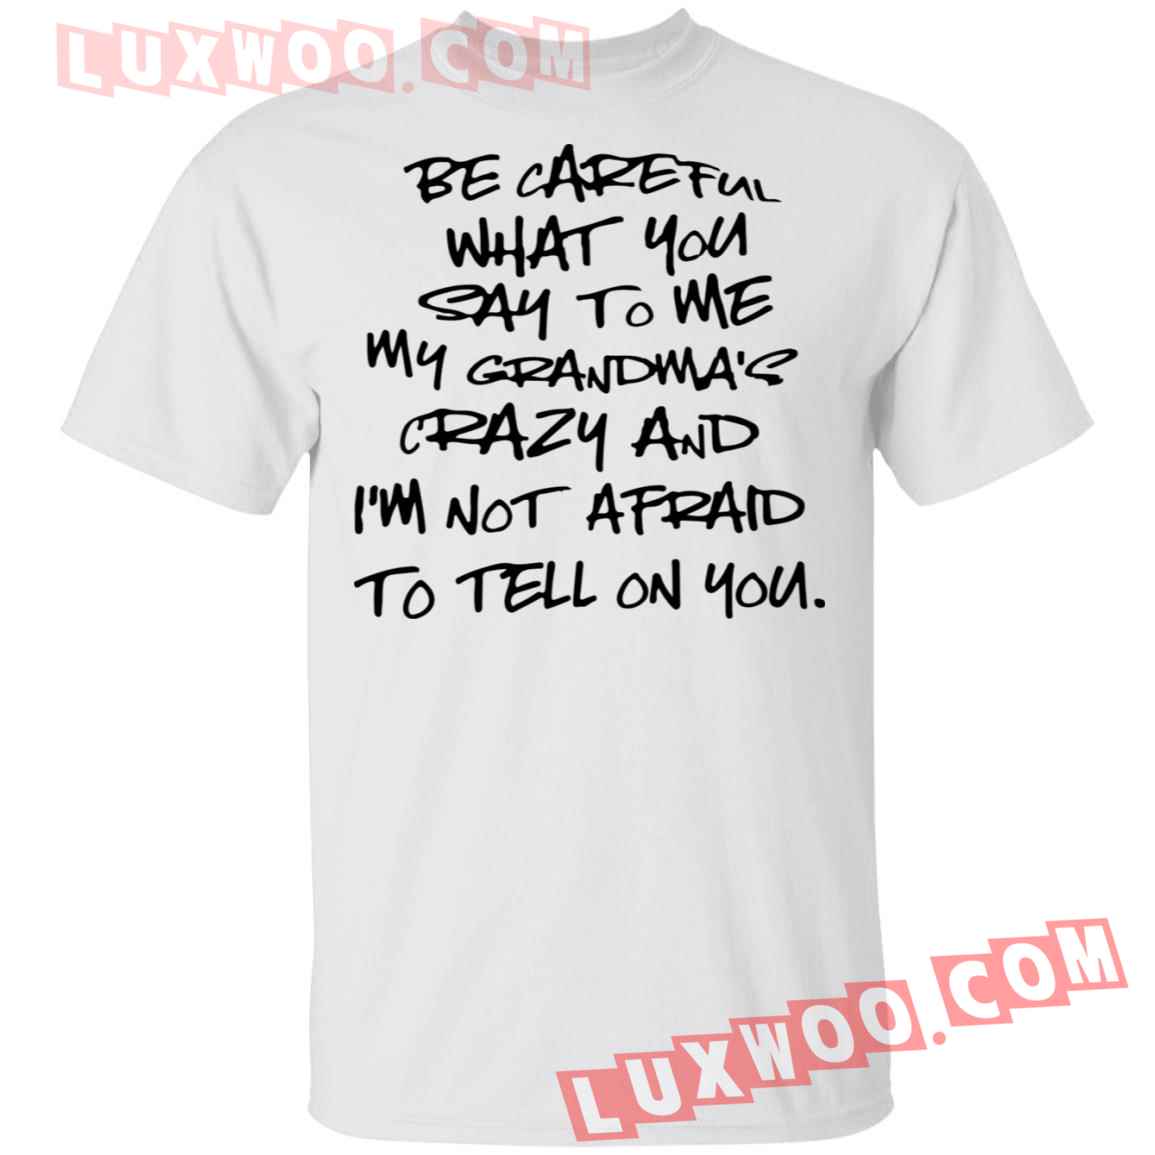 Be Careful What You Say To Me My Grandmas Crazy Shirt - Luxwoo.com